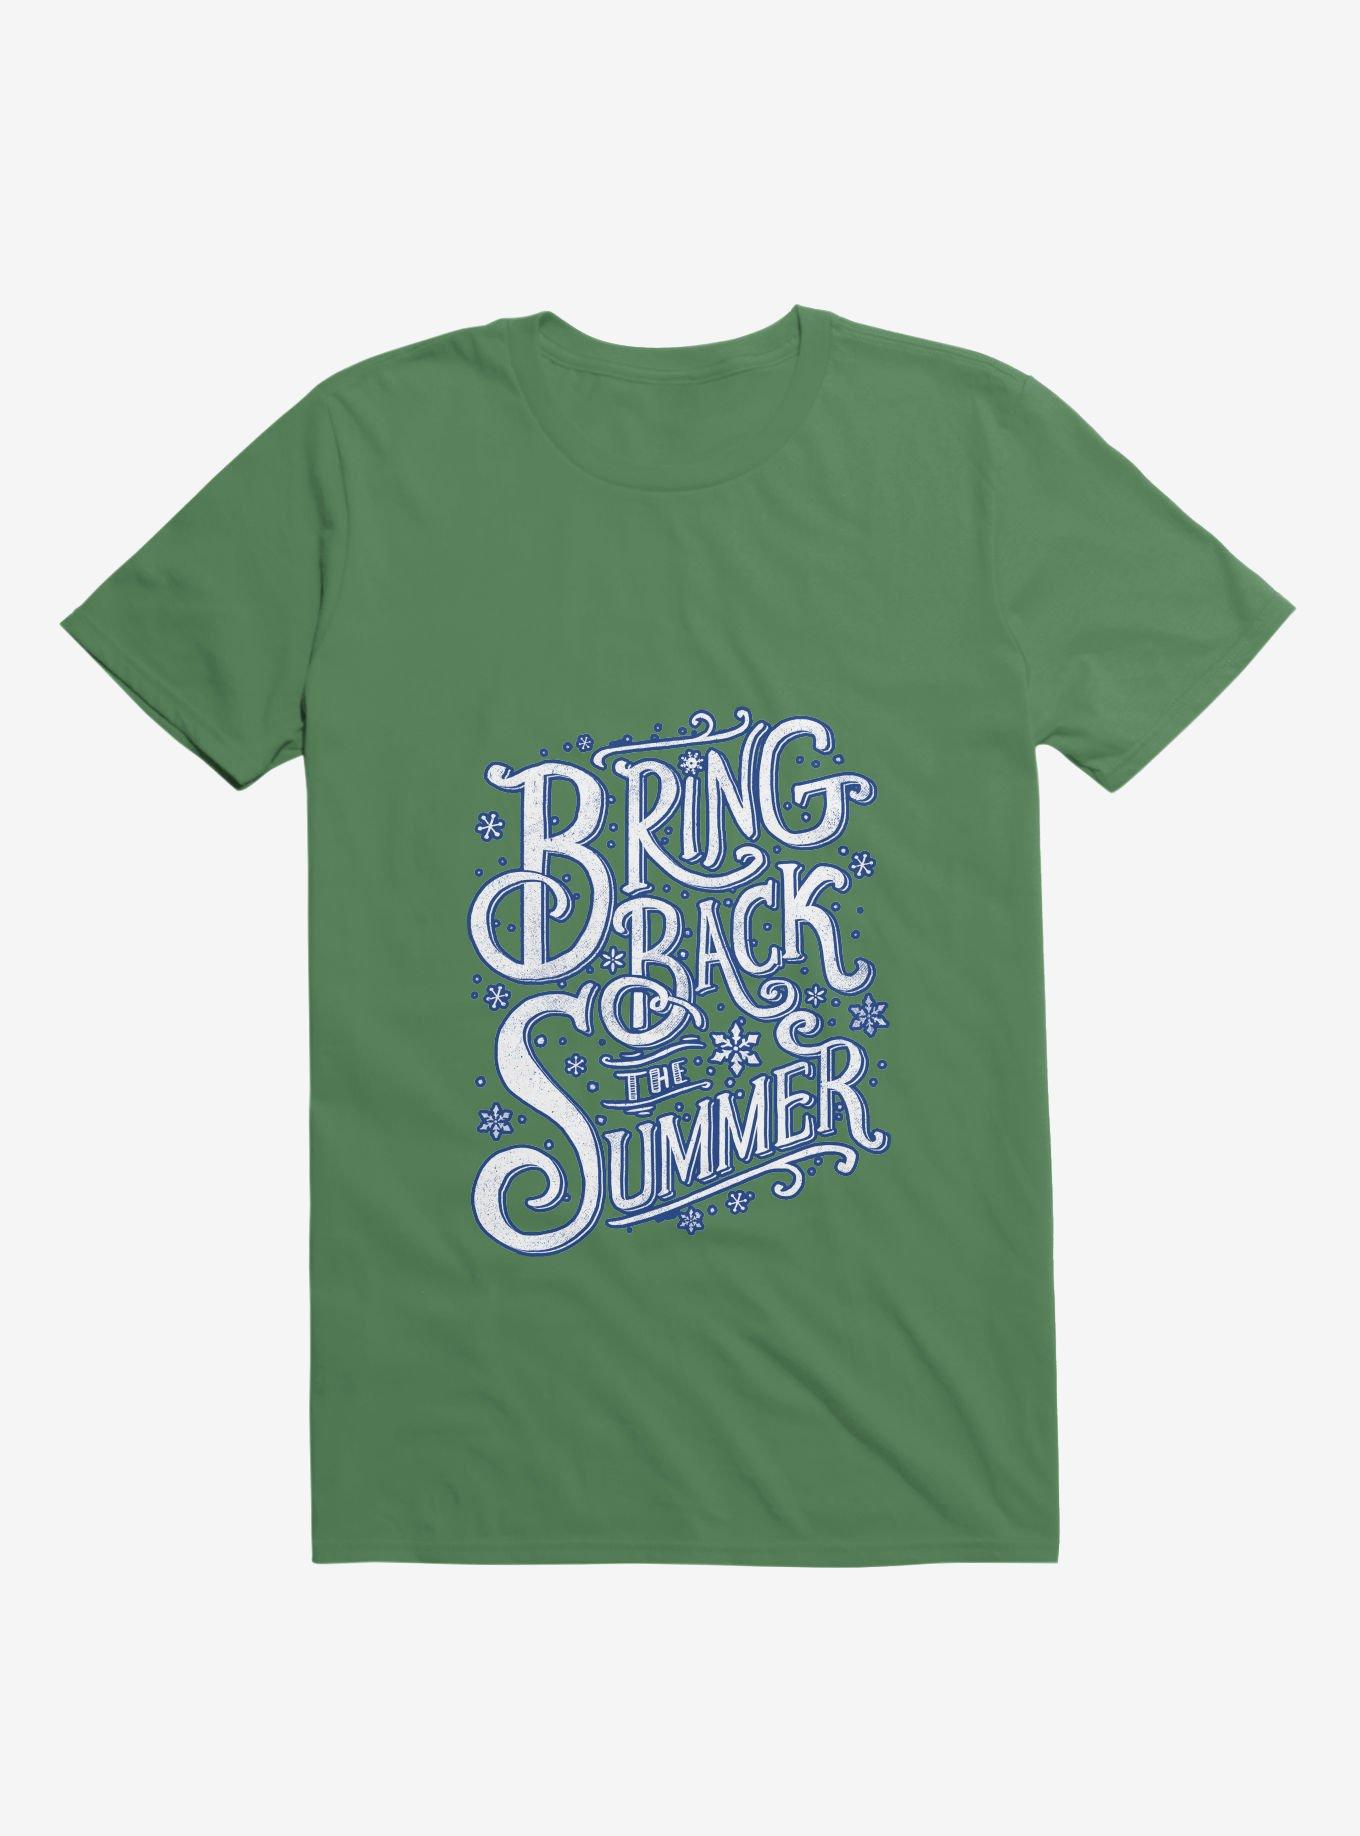 Bring Back The Summer Kelly Green T-Shirt